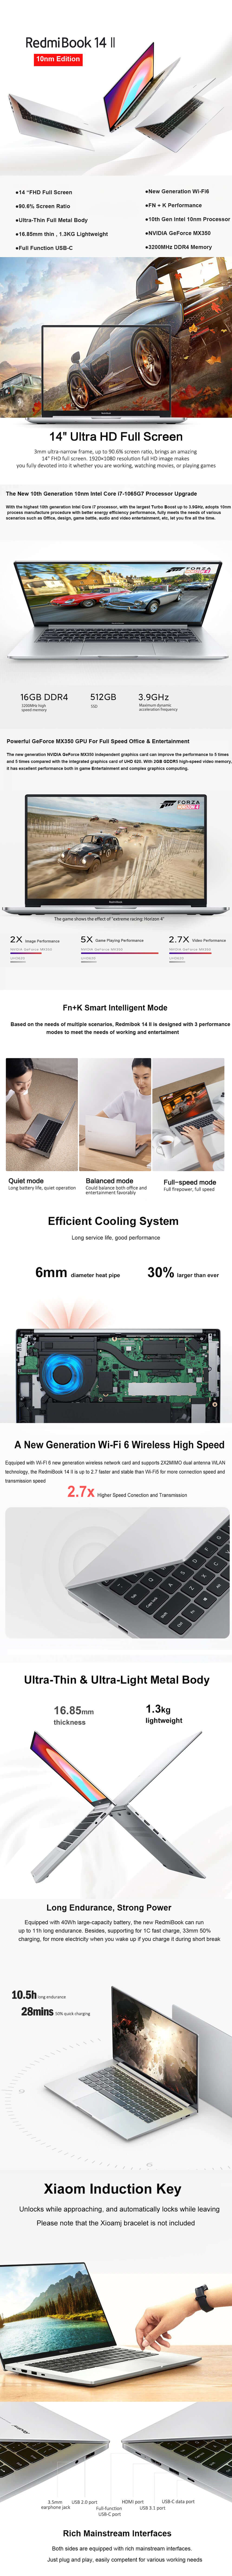 Xiaomi RedmiBook 14 Laptop II 14 inch Intel i7-1065G7 NVIDIA GeForce MX350 16G DDR4 512GB SSD 91% Ratio 100%sRGB WiFi 6 Full-featured Type-C Notebook 4